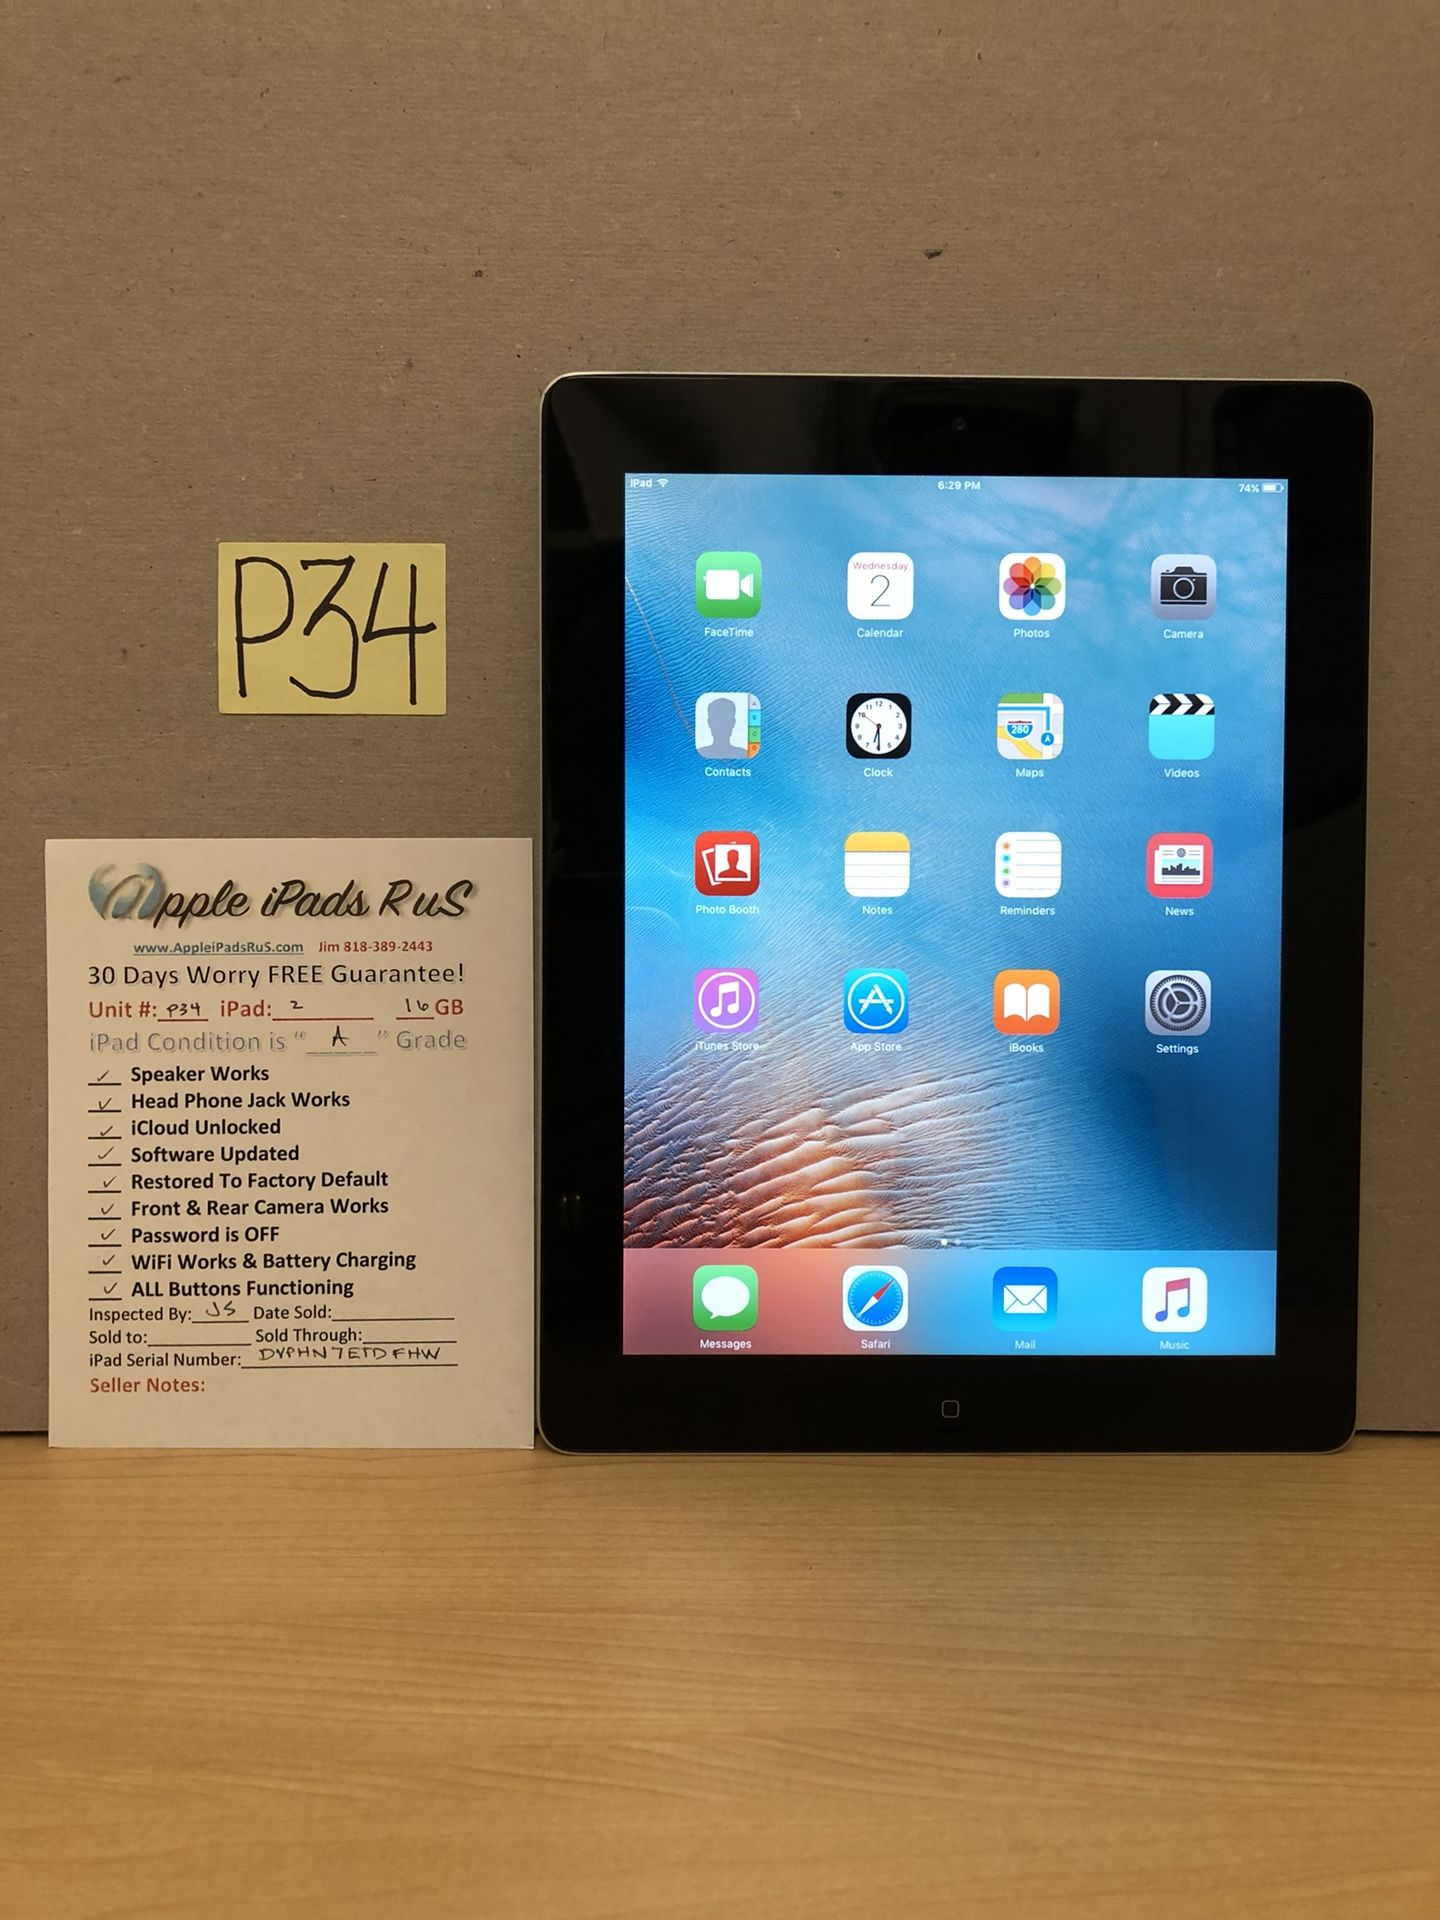 P34 - iPad 2 16GB